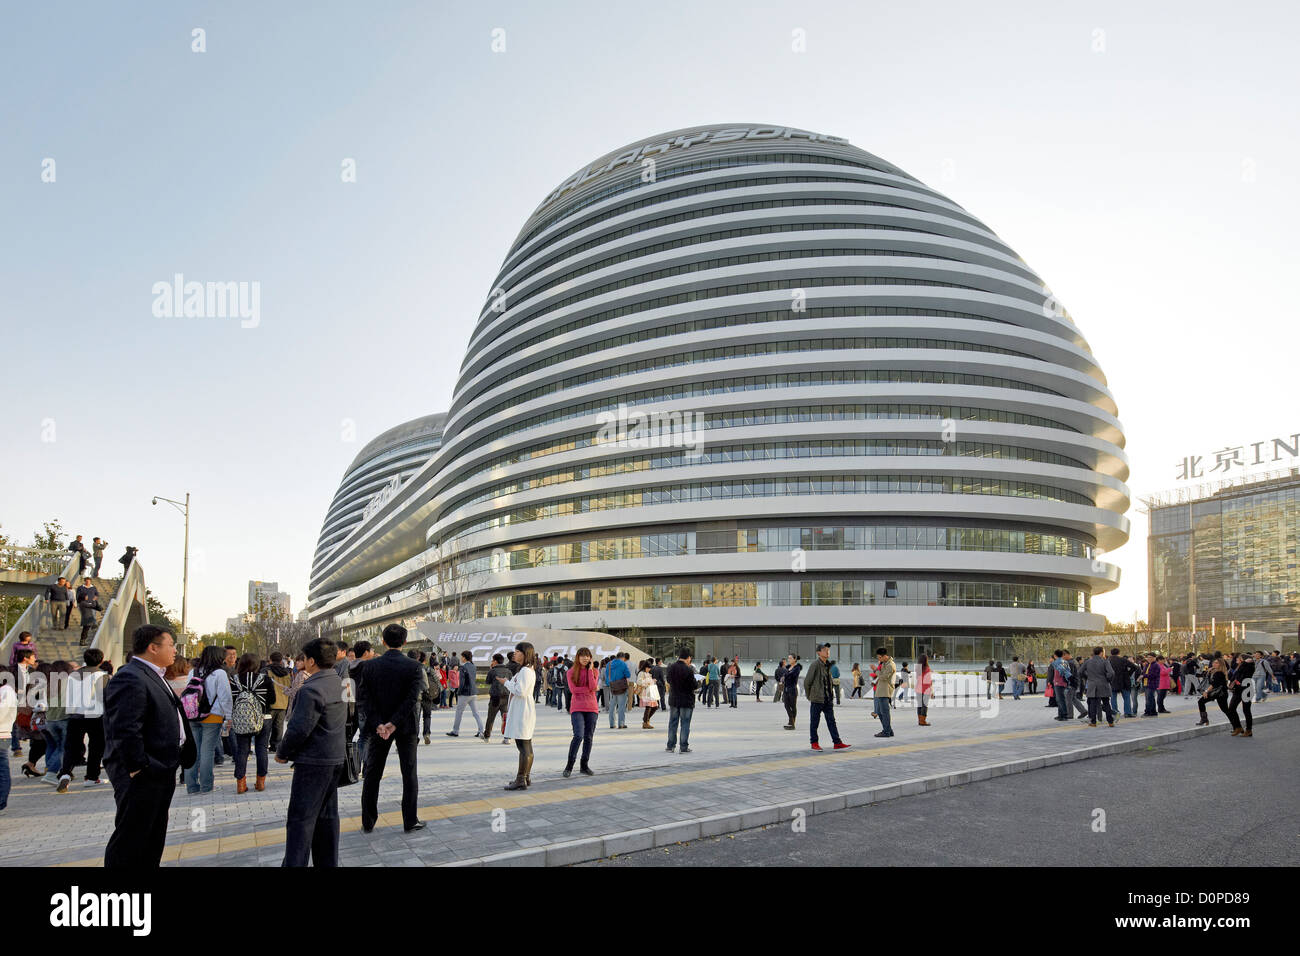 Galaxy-Soho, Peking, China. Architekt: Zaha Hadid Architects, 2012. Straßenszene mit Kuppeln im Hintergrund gedrängt. Stockfoto